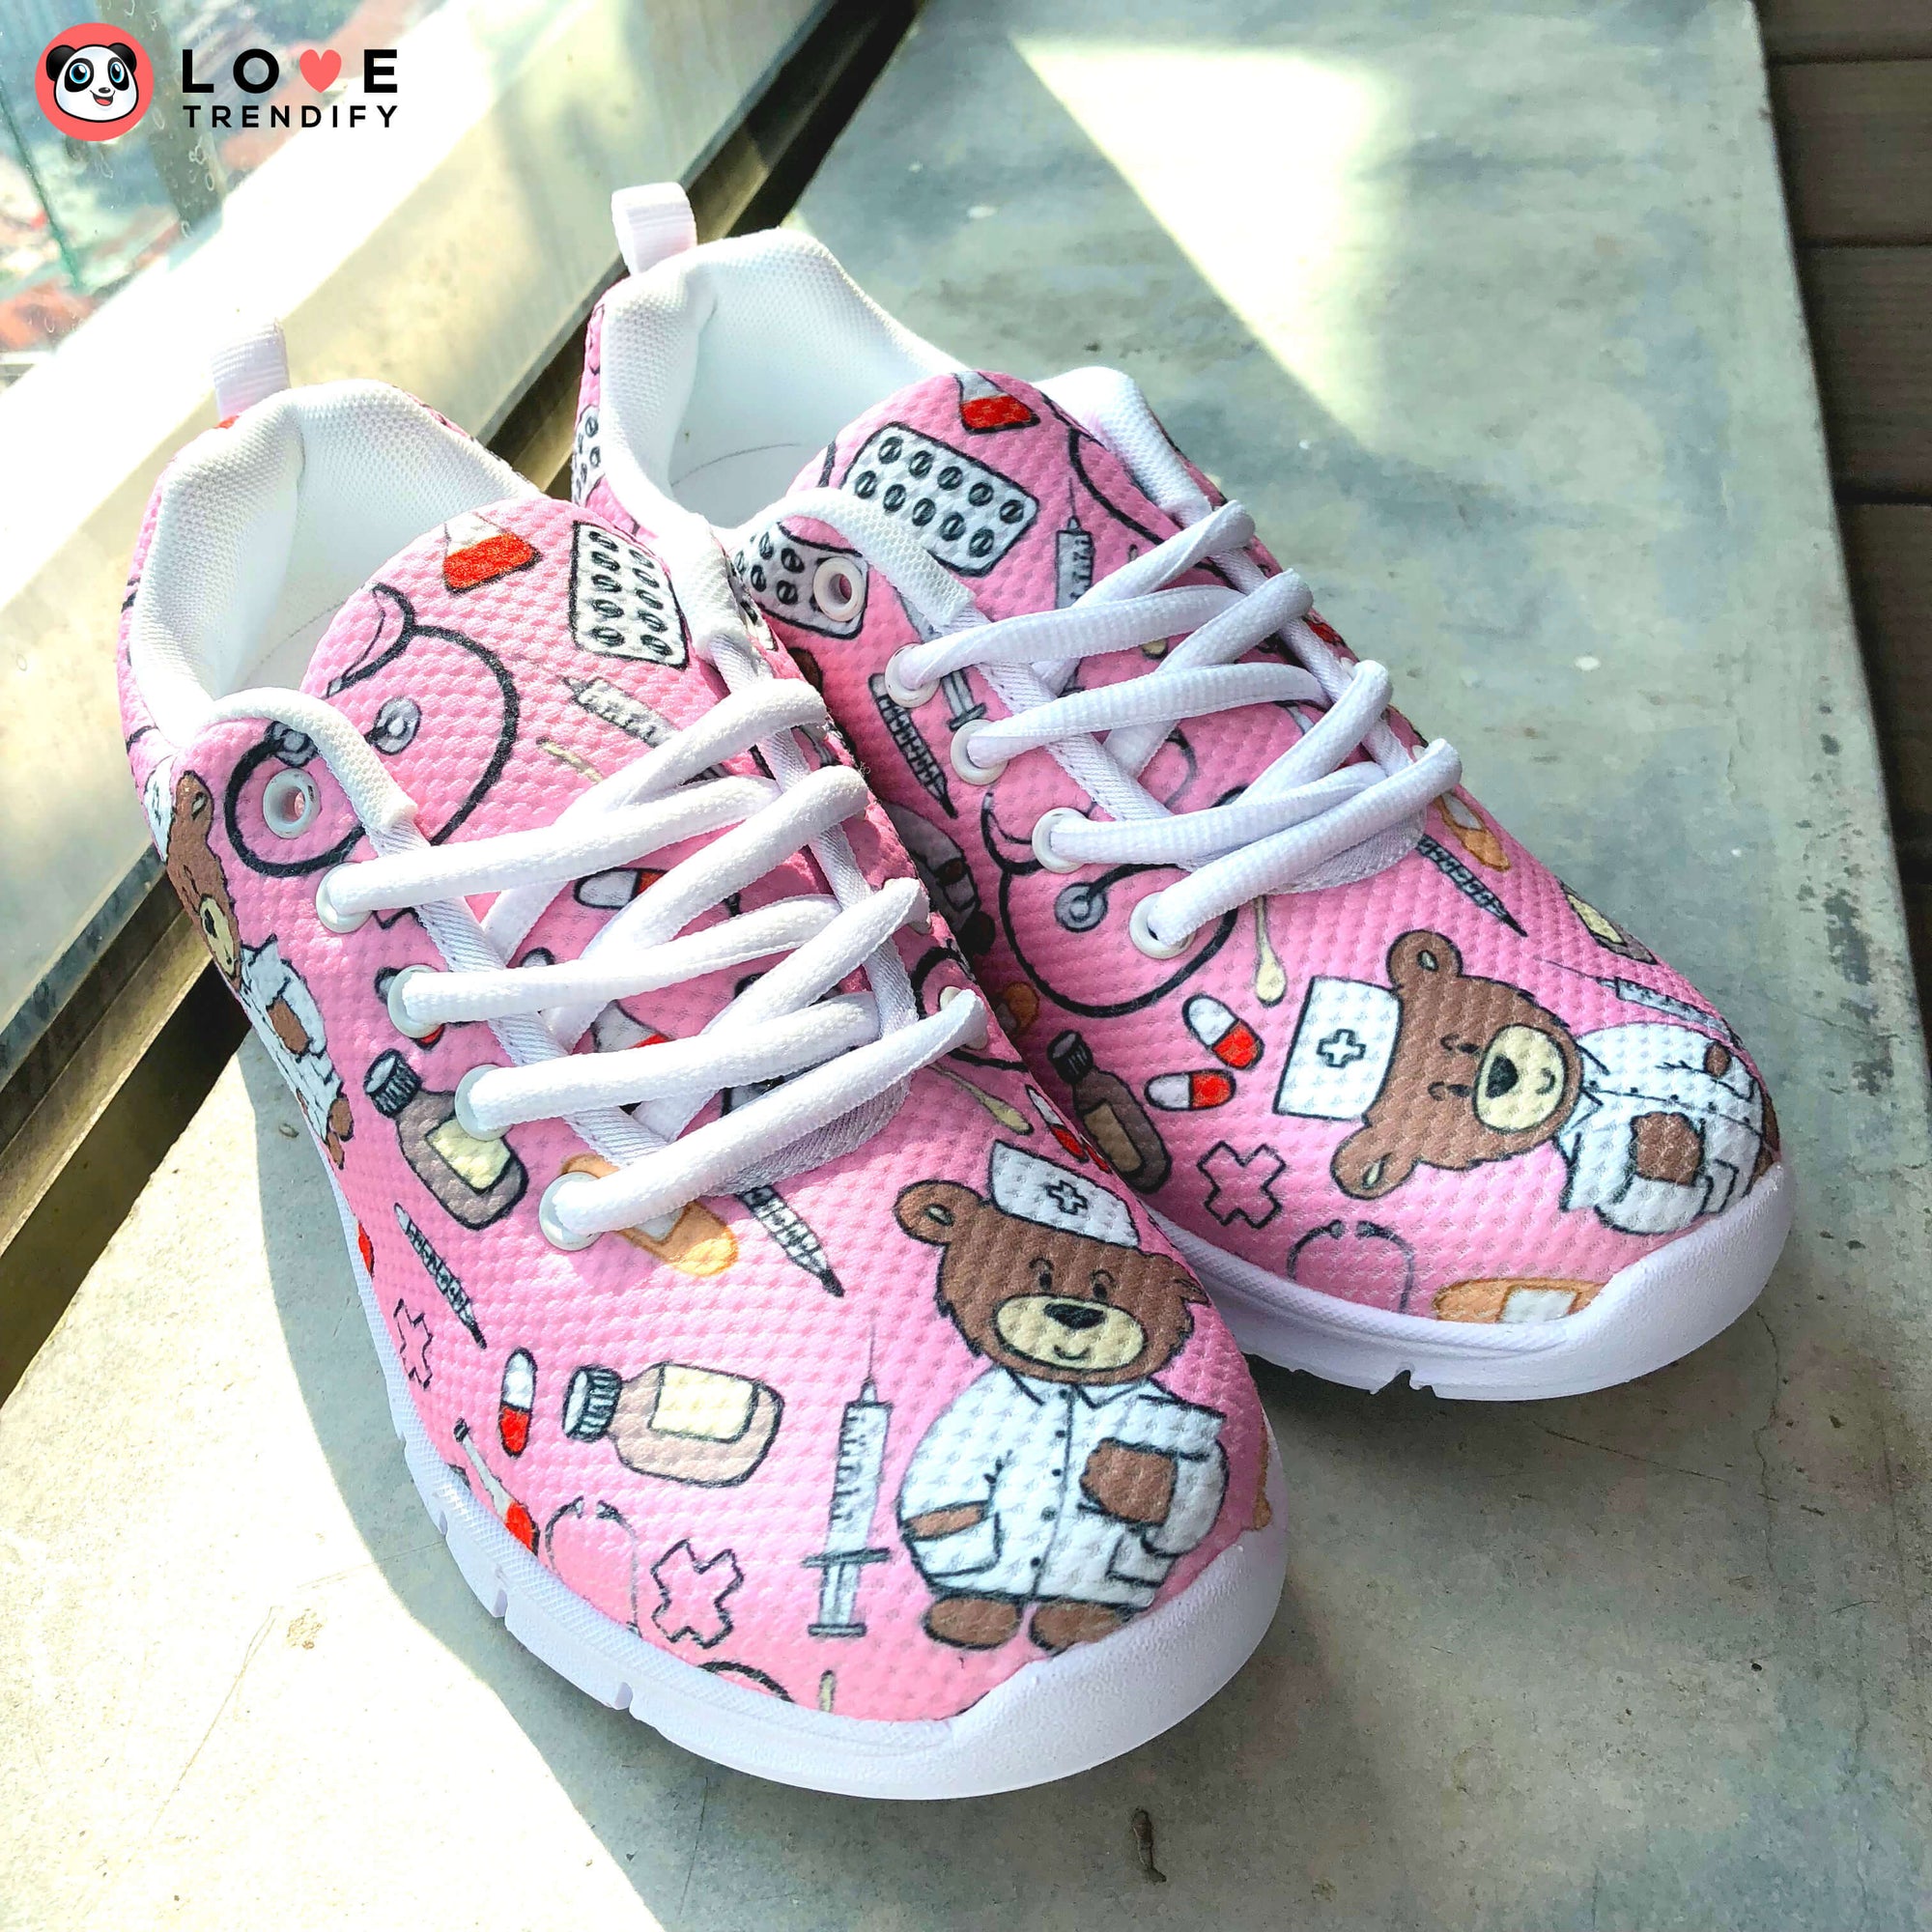 Nurse Sneakers (Nursing Tennis Shoes) for Women - Pink - lovetrendify